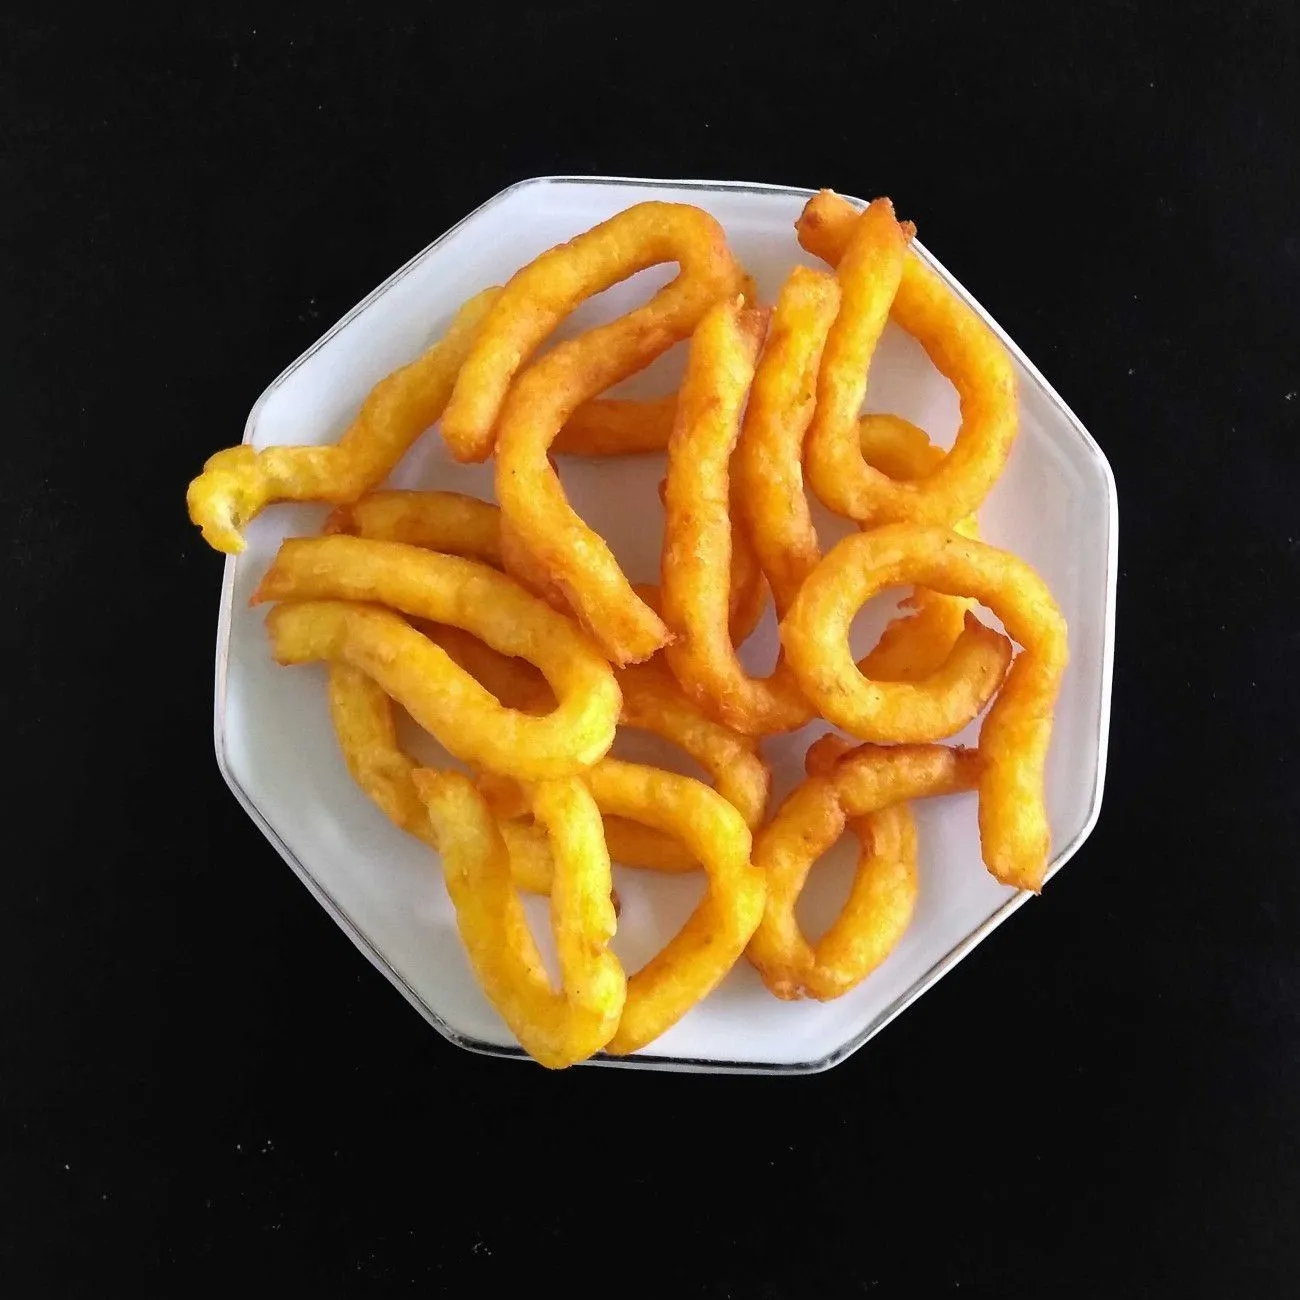 Cheetos Kentang Keju Homemade #JagoMasakMinggu3Periode3